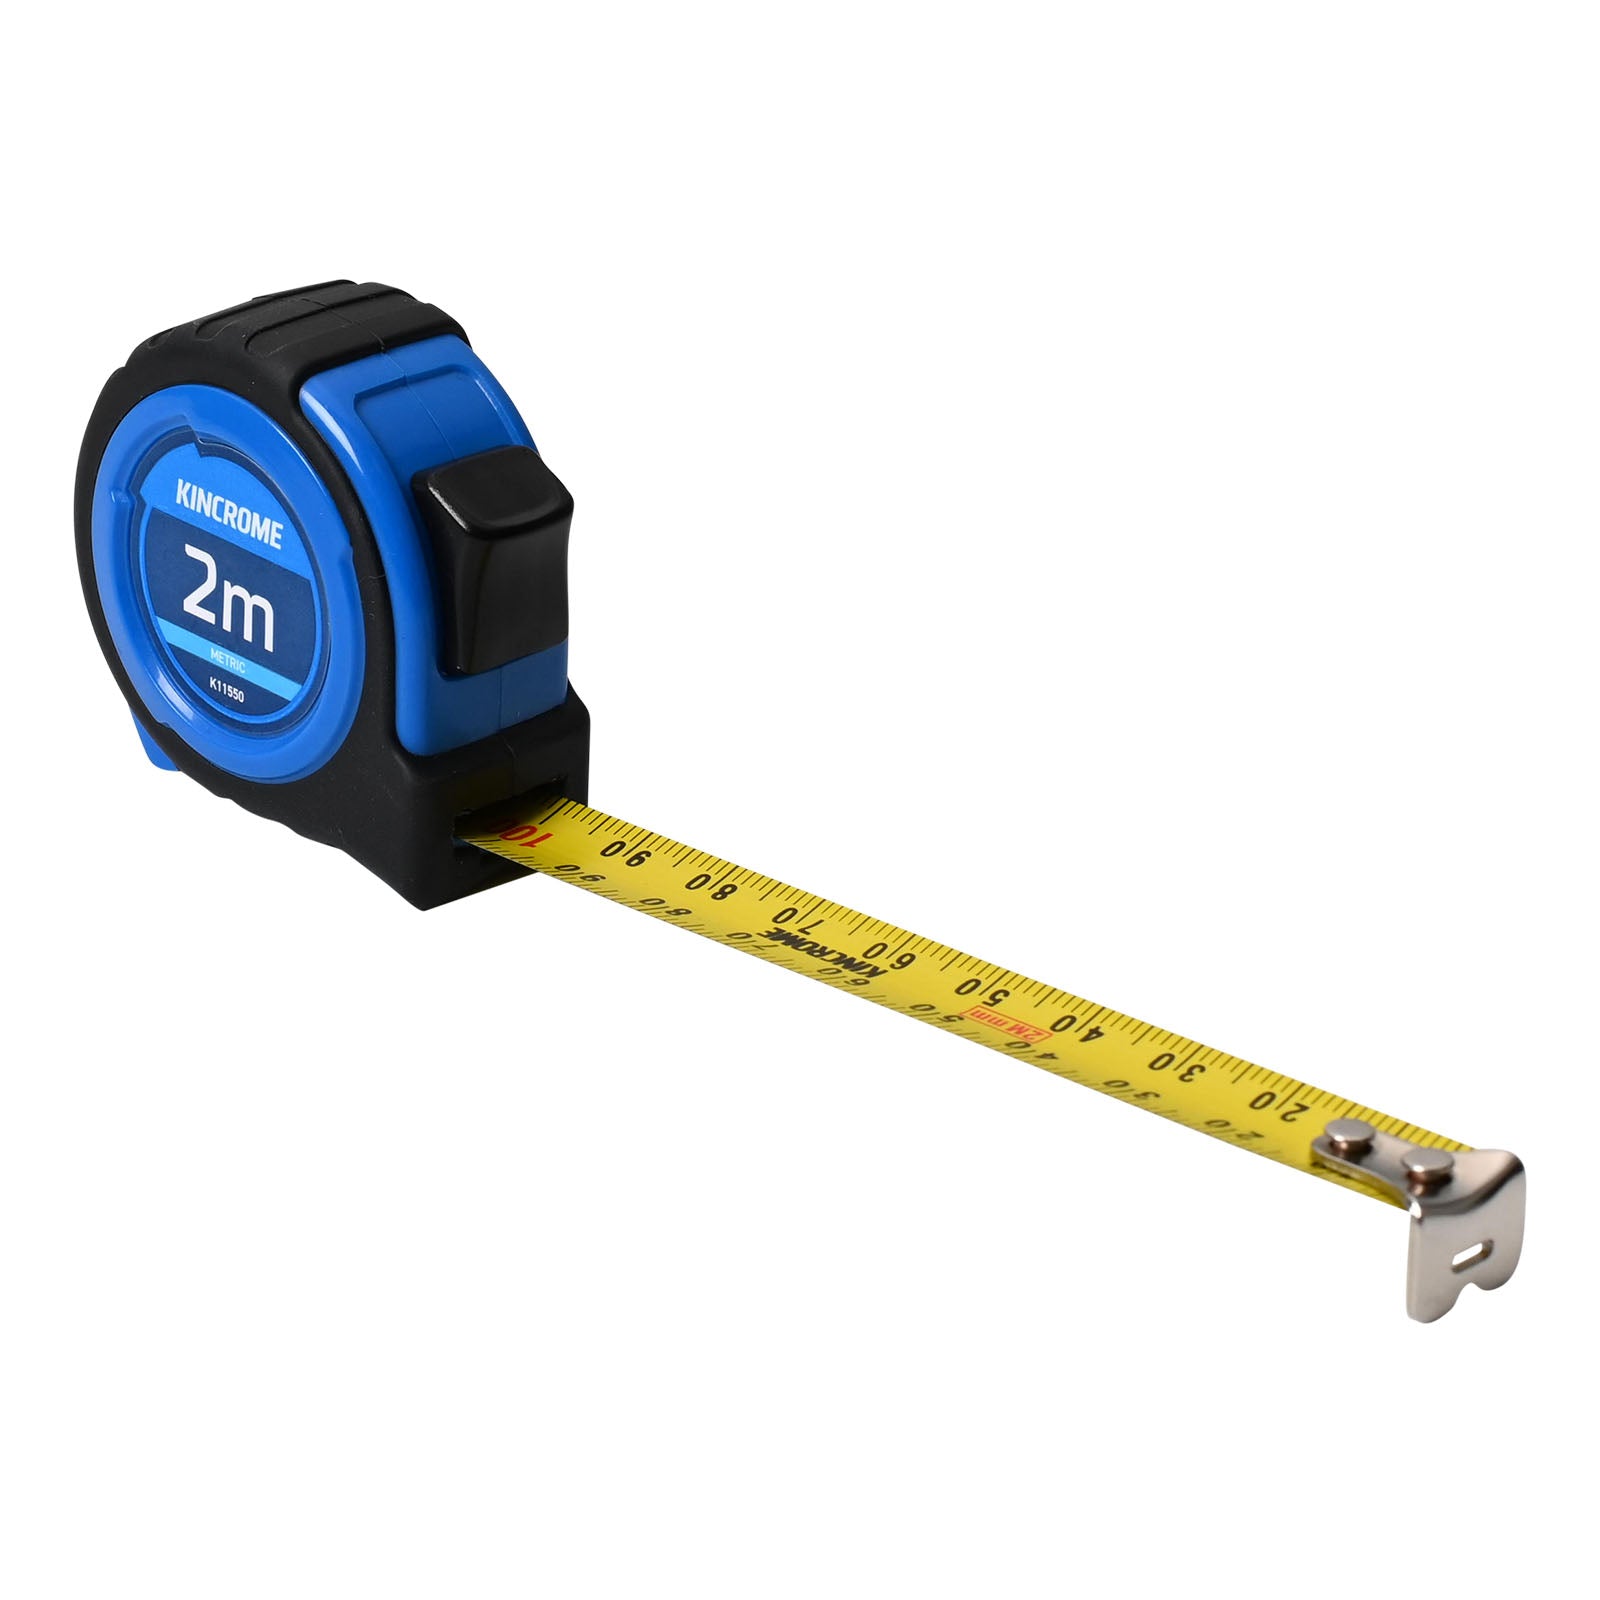 2M Tape Measure, Metric  - K11550 by Kincrome